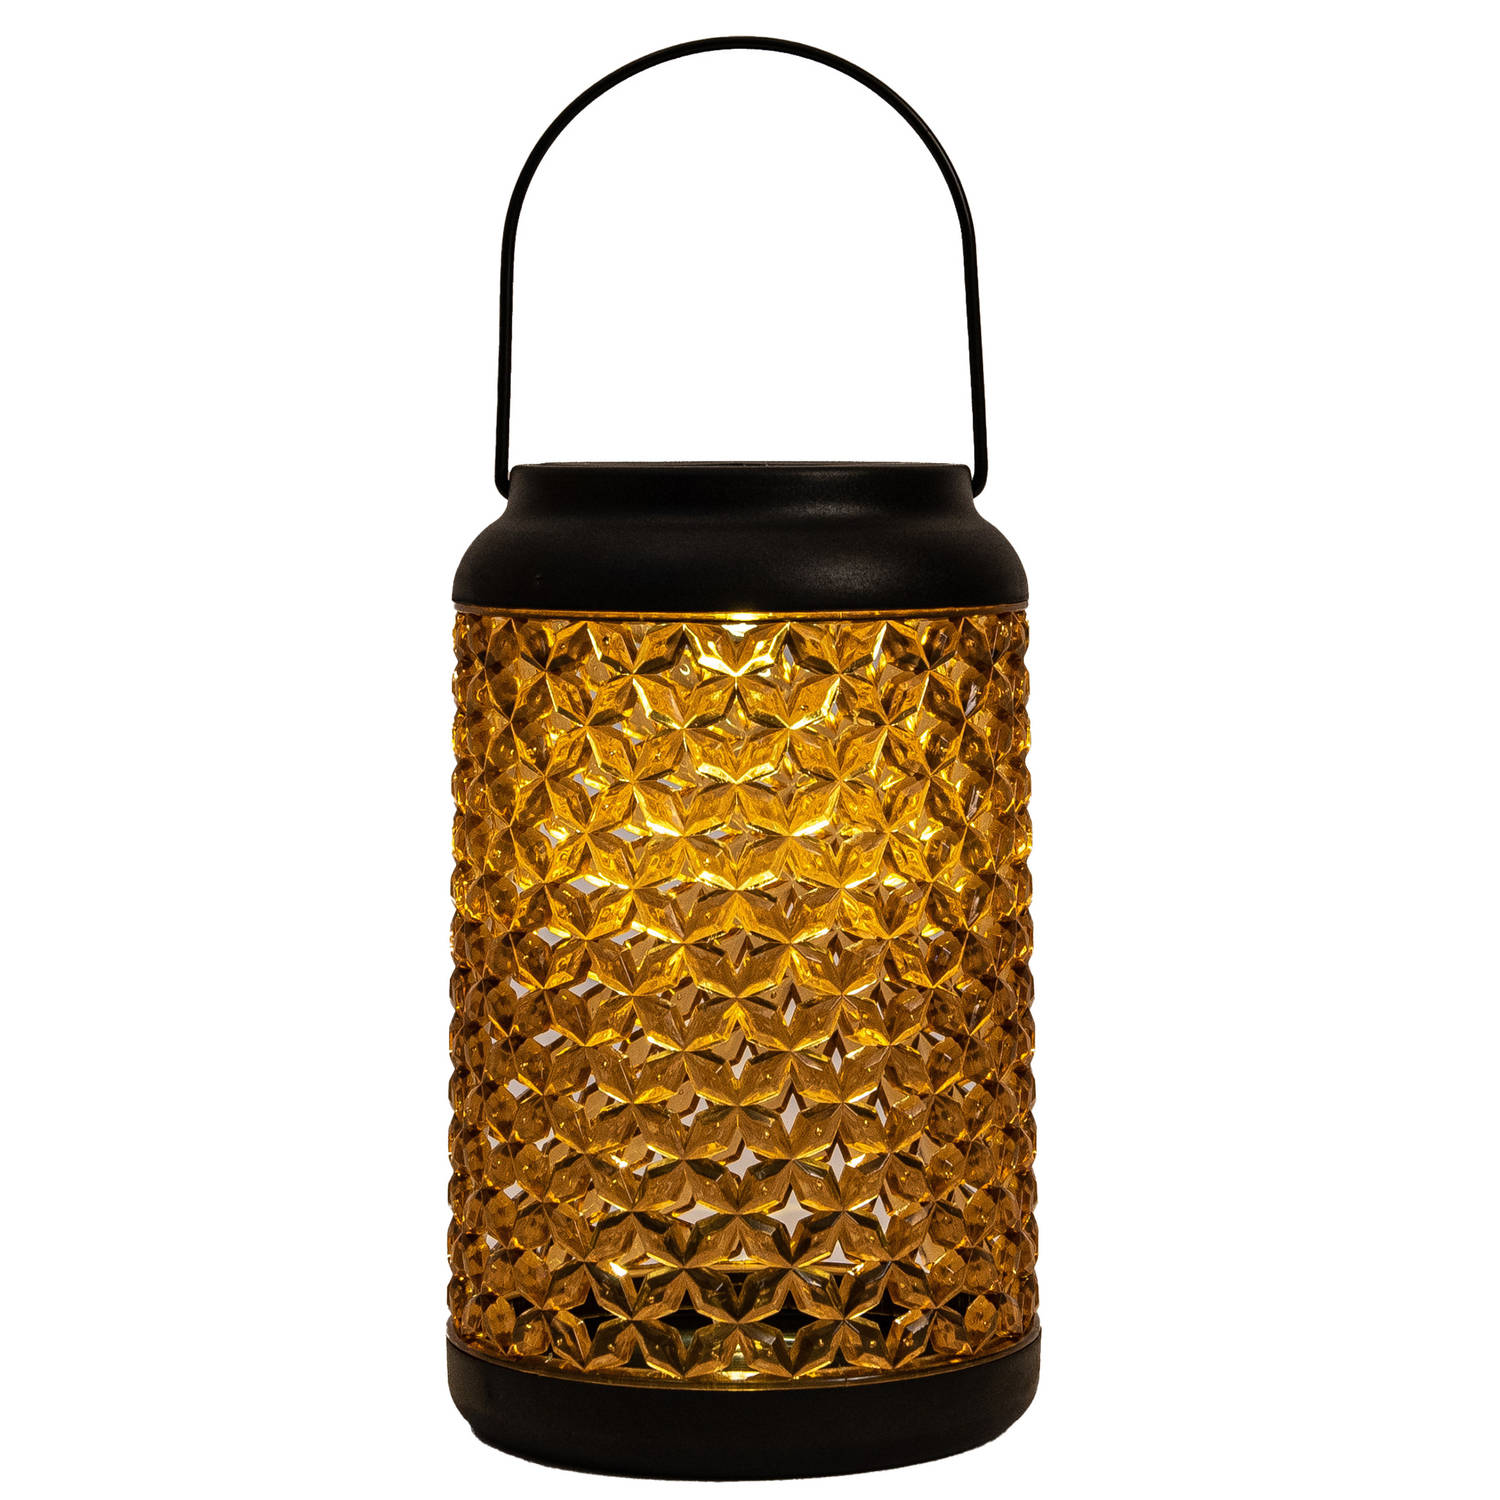 Anna&apos;s Collection Solar lantaarn - voor buiten - D12,5 x H20 cm - amber glas - tafellamp - Lantaarns